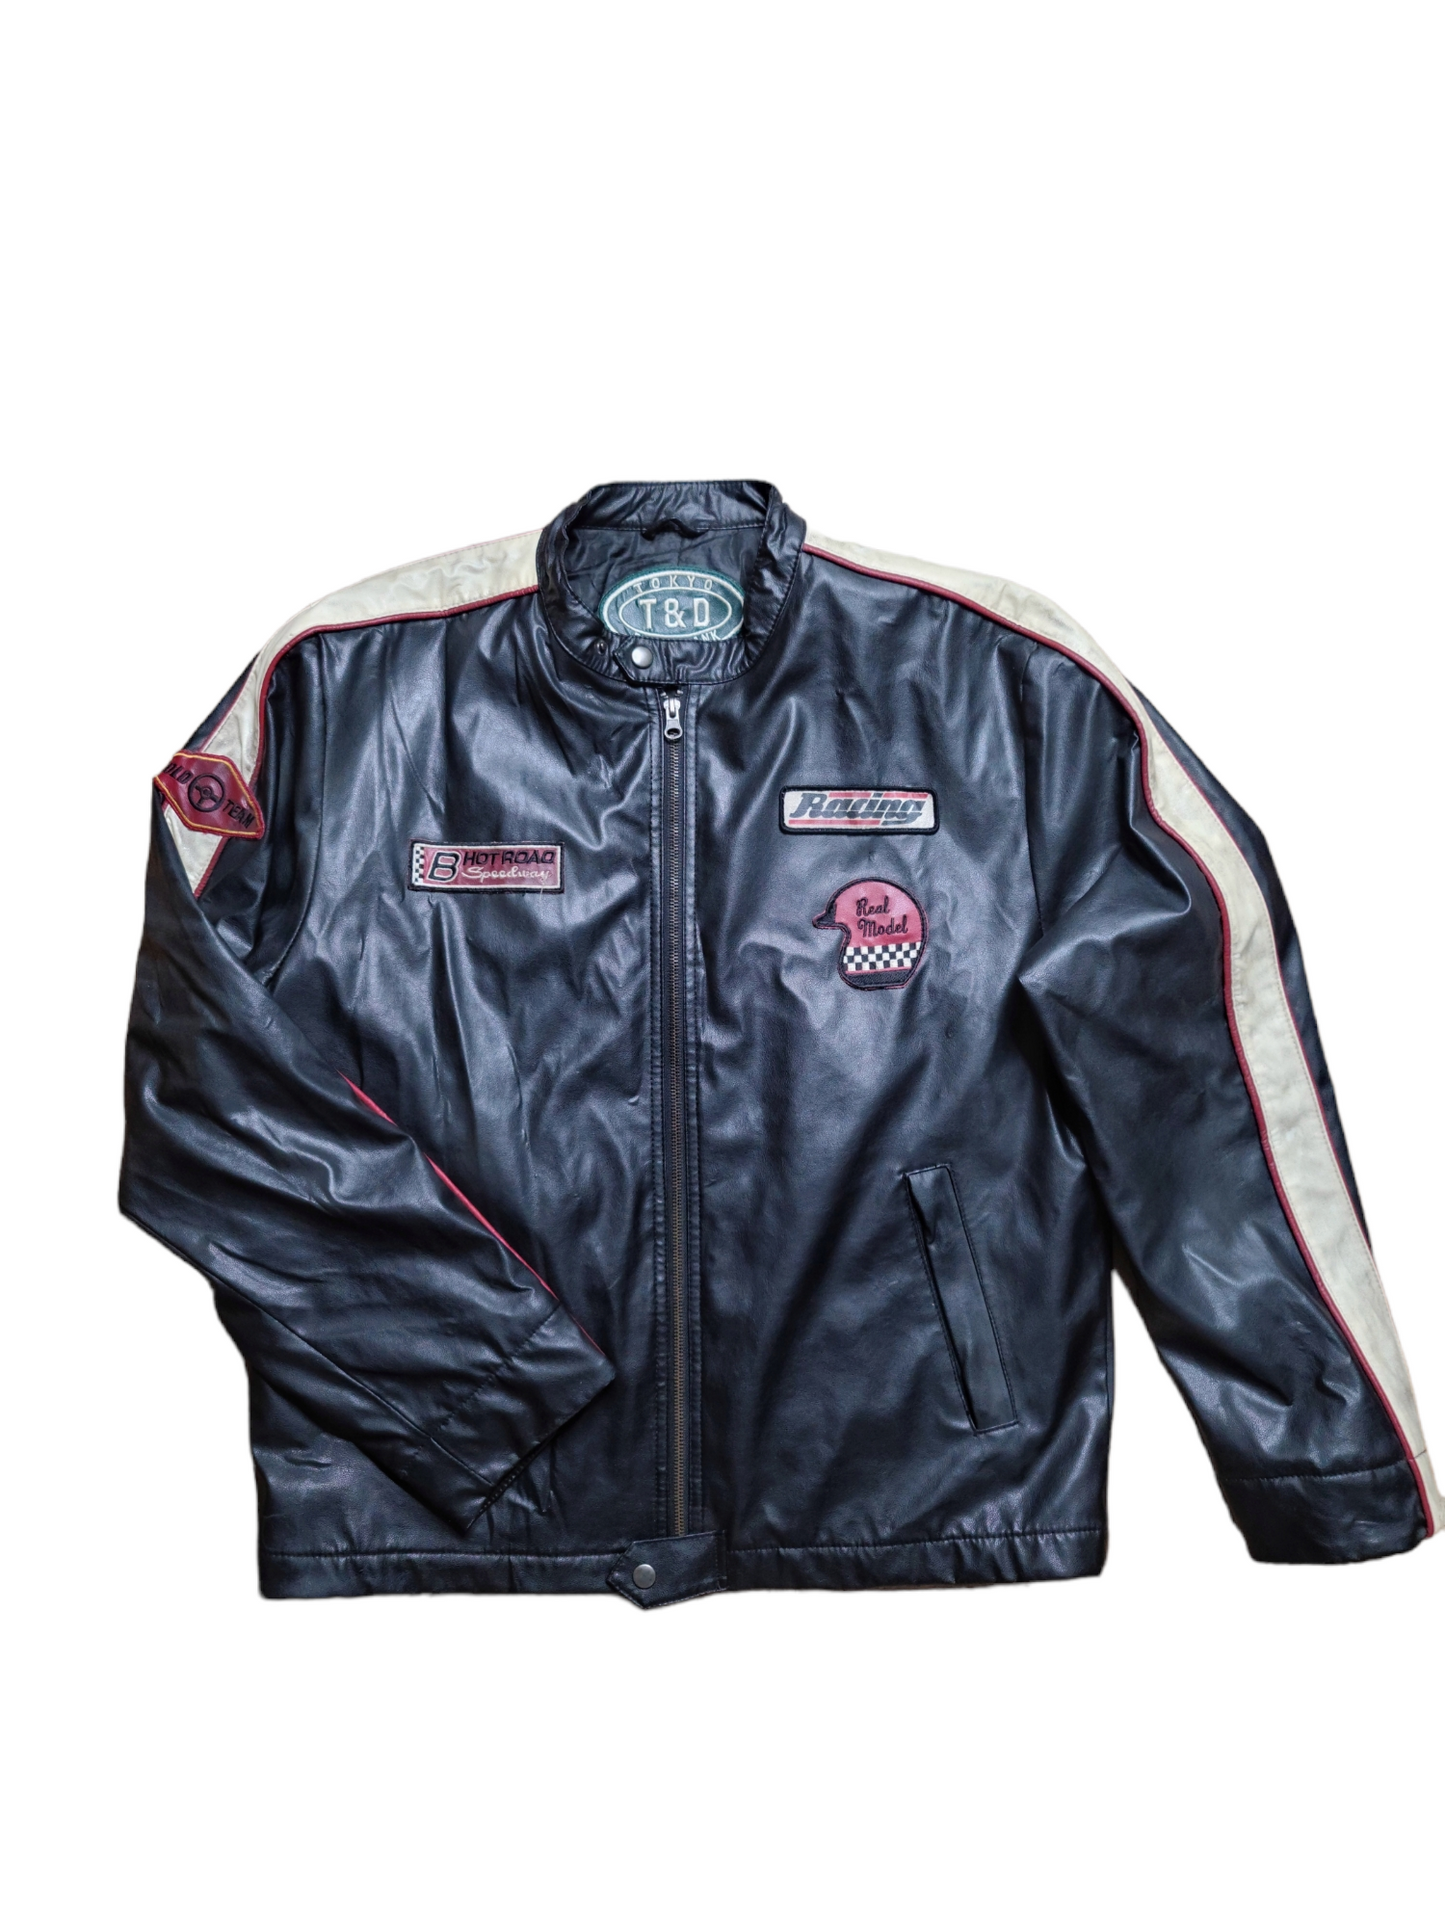 Motorcycle blouson jacket vintage oversize marron grunge 90s aesthetic y2k rare archive fashion racing